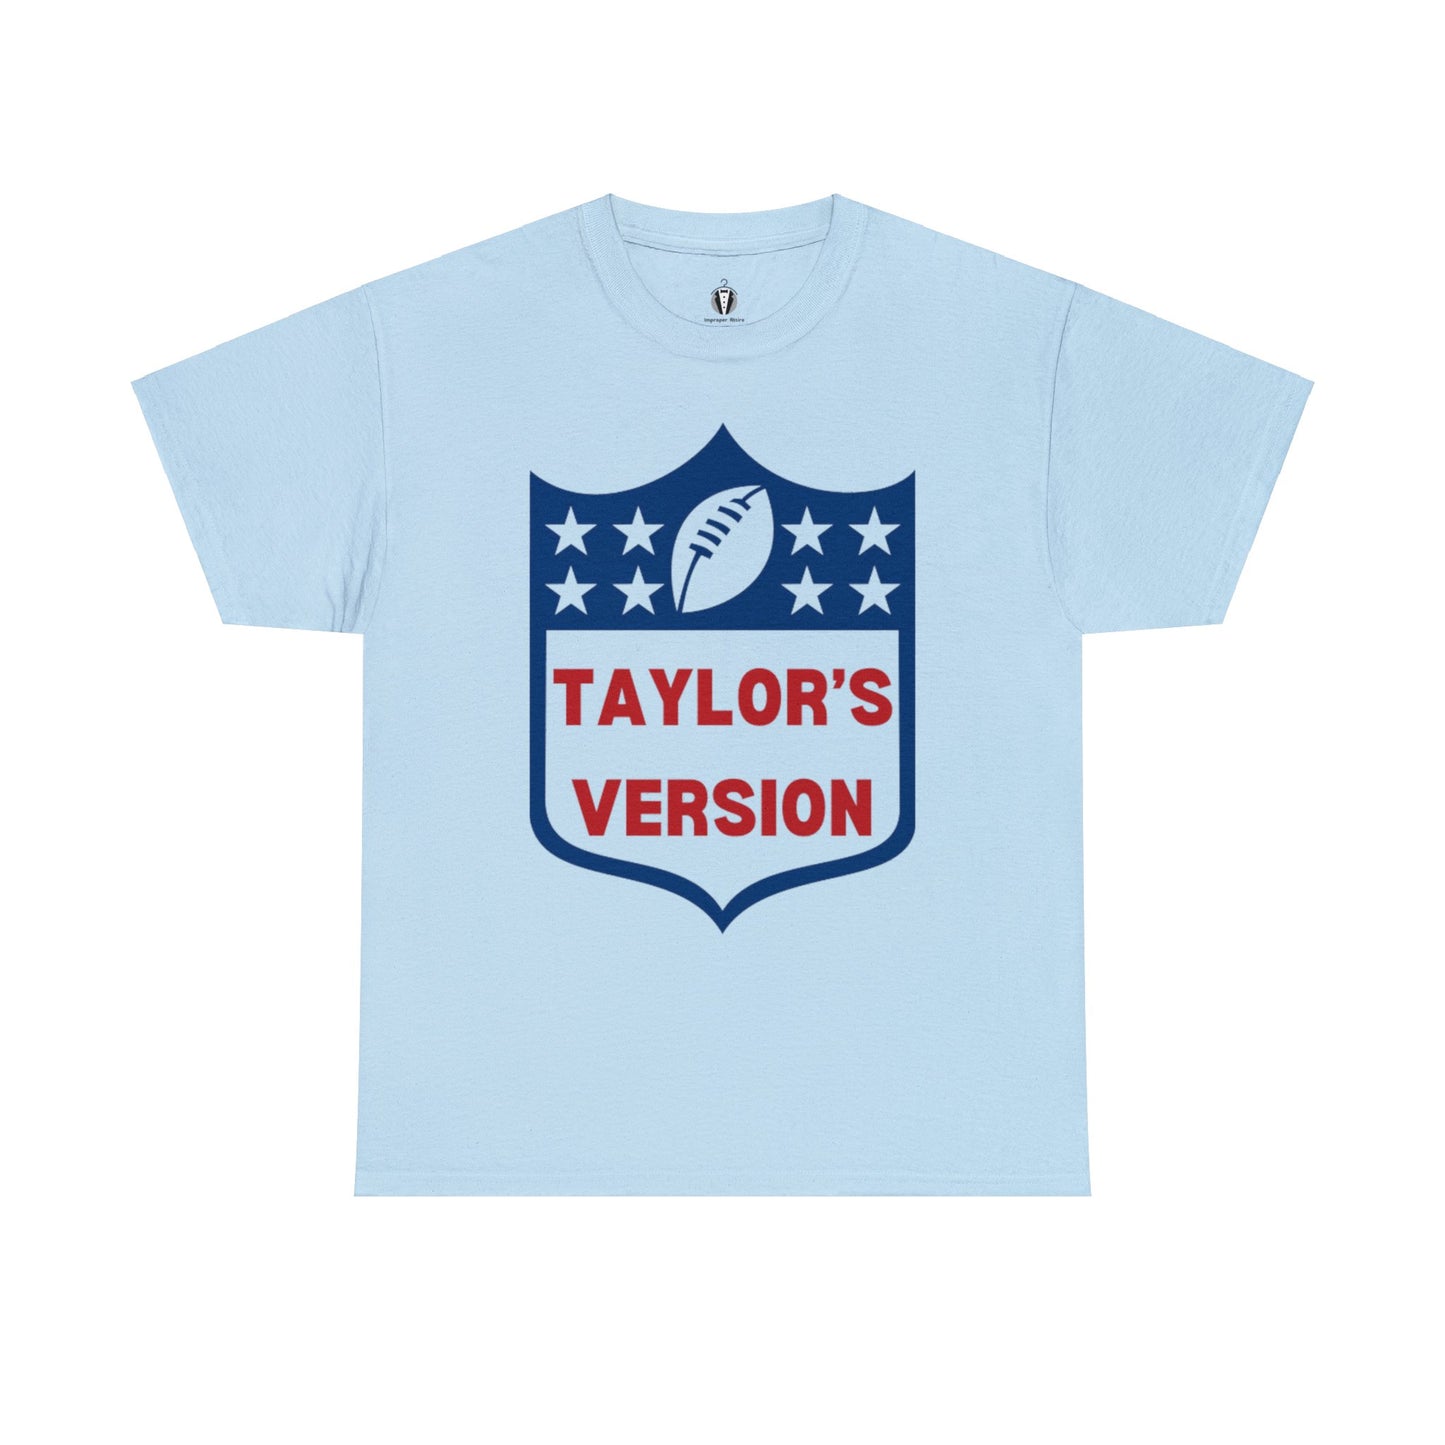 "Taylors Version" - Tee